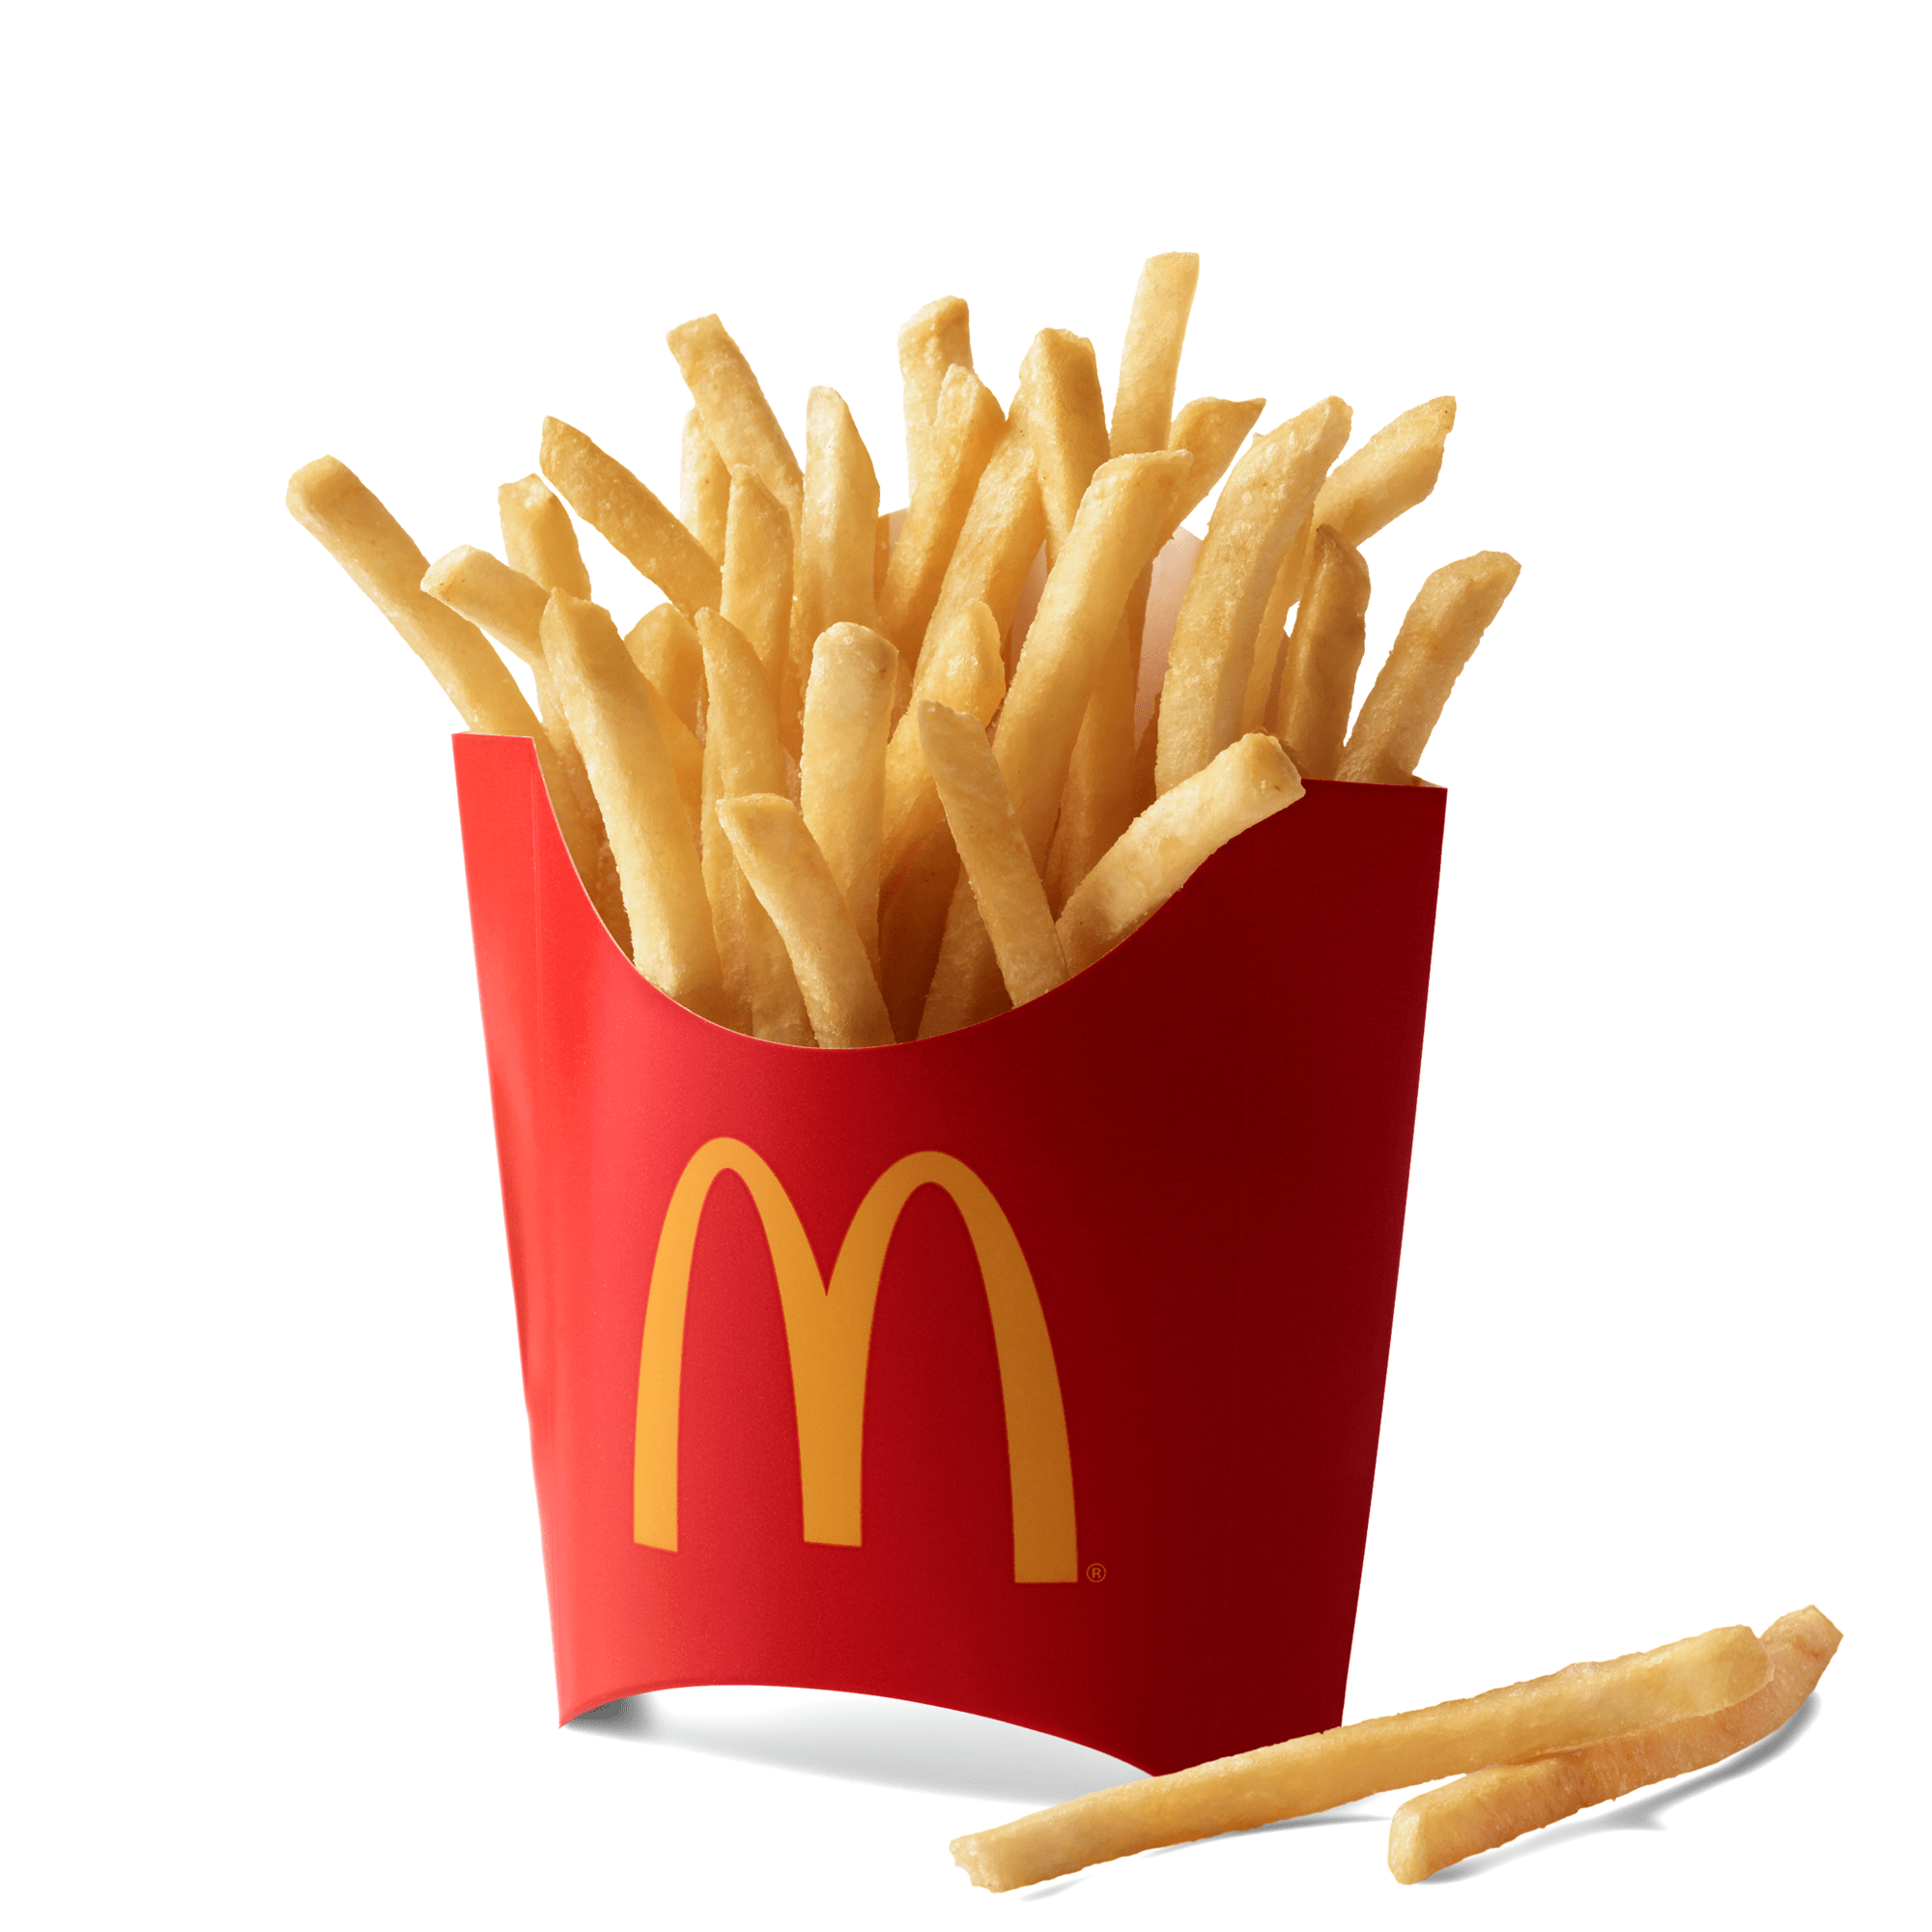 McDonalds french fries